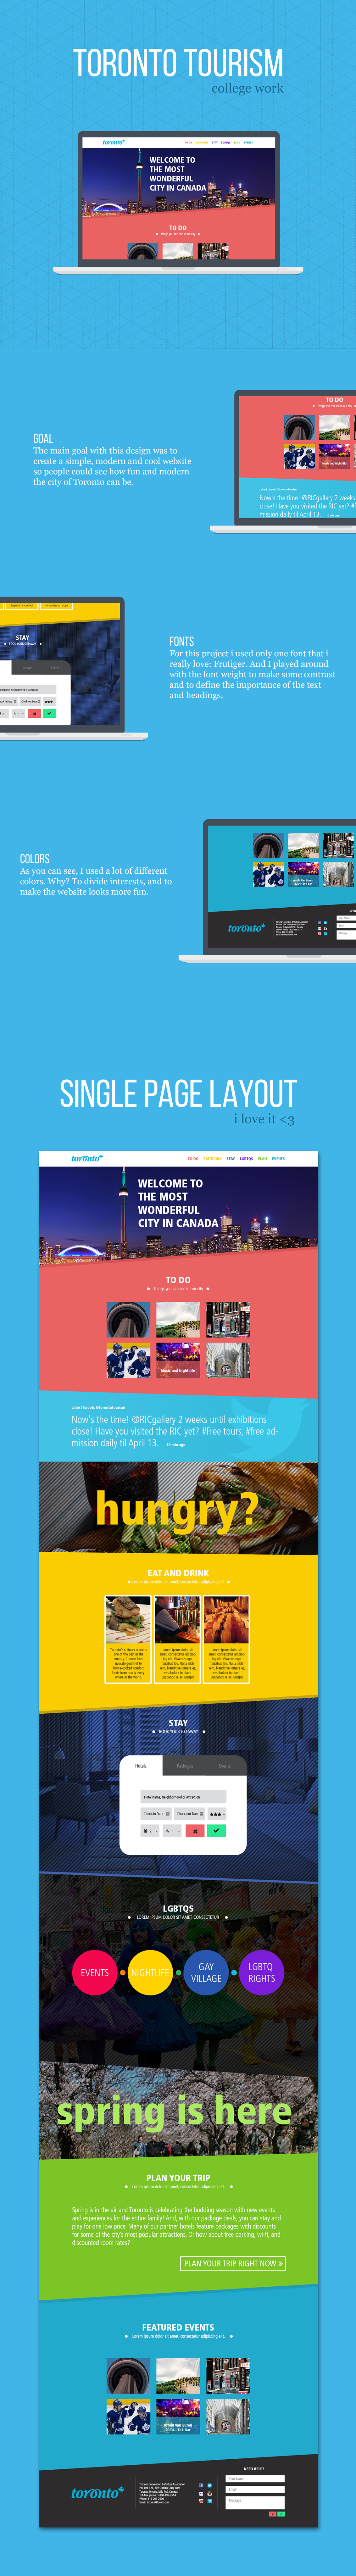 Toronto toronto tourism redesign single page layout